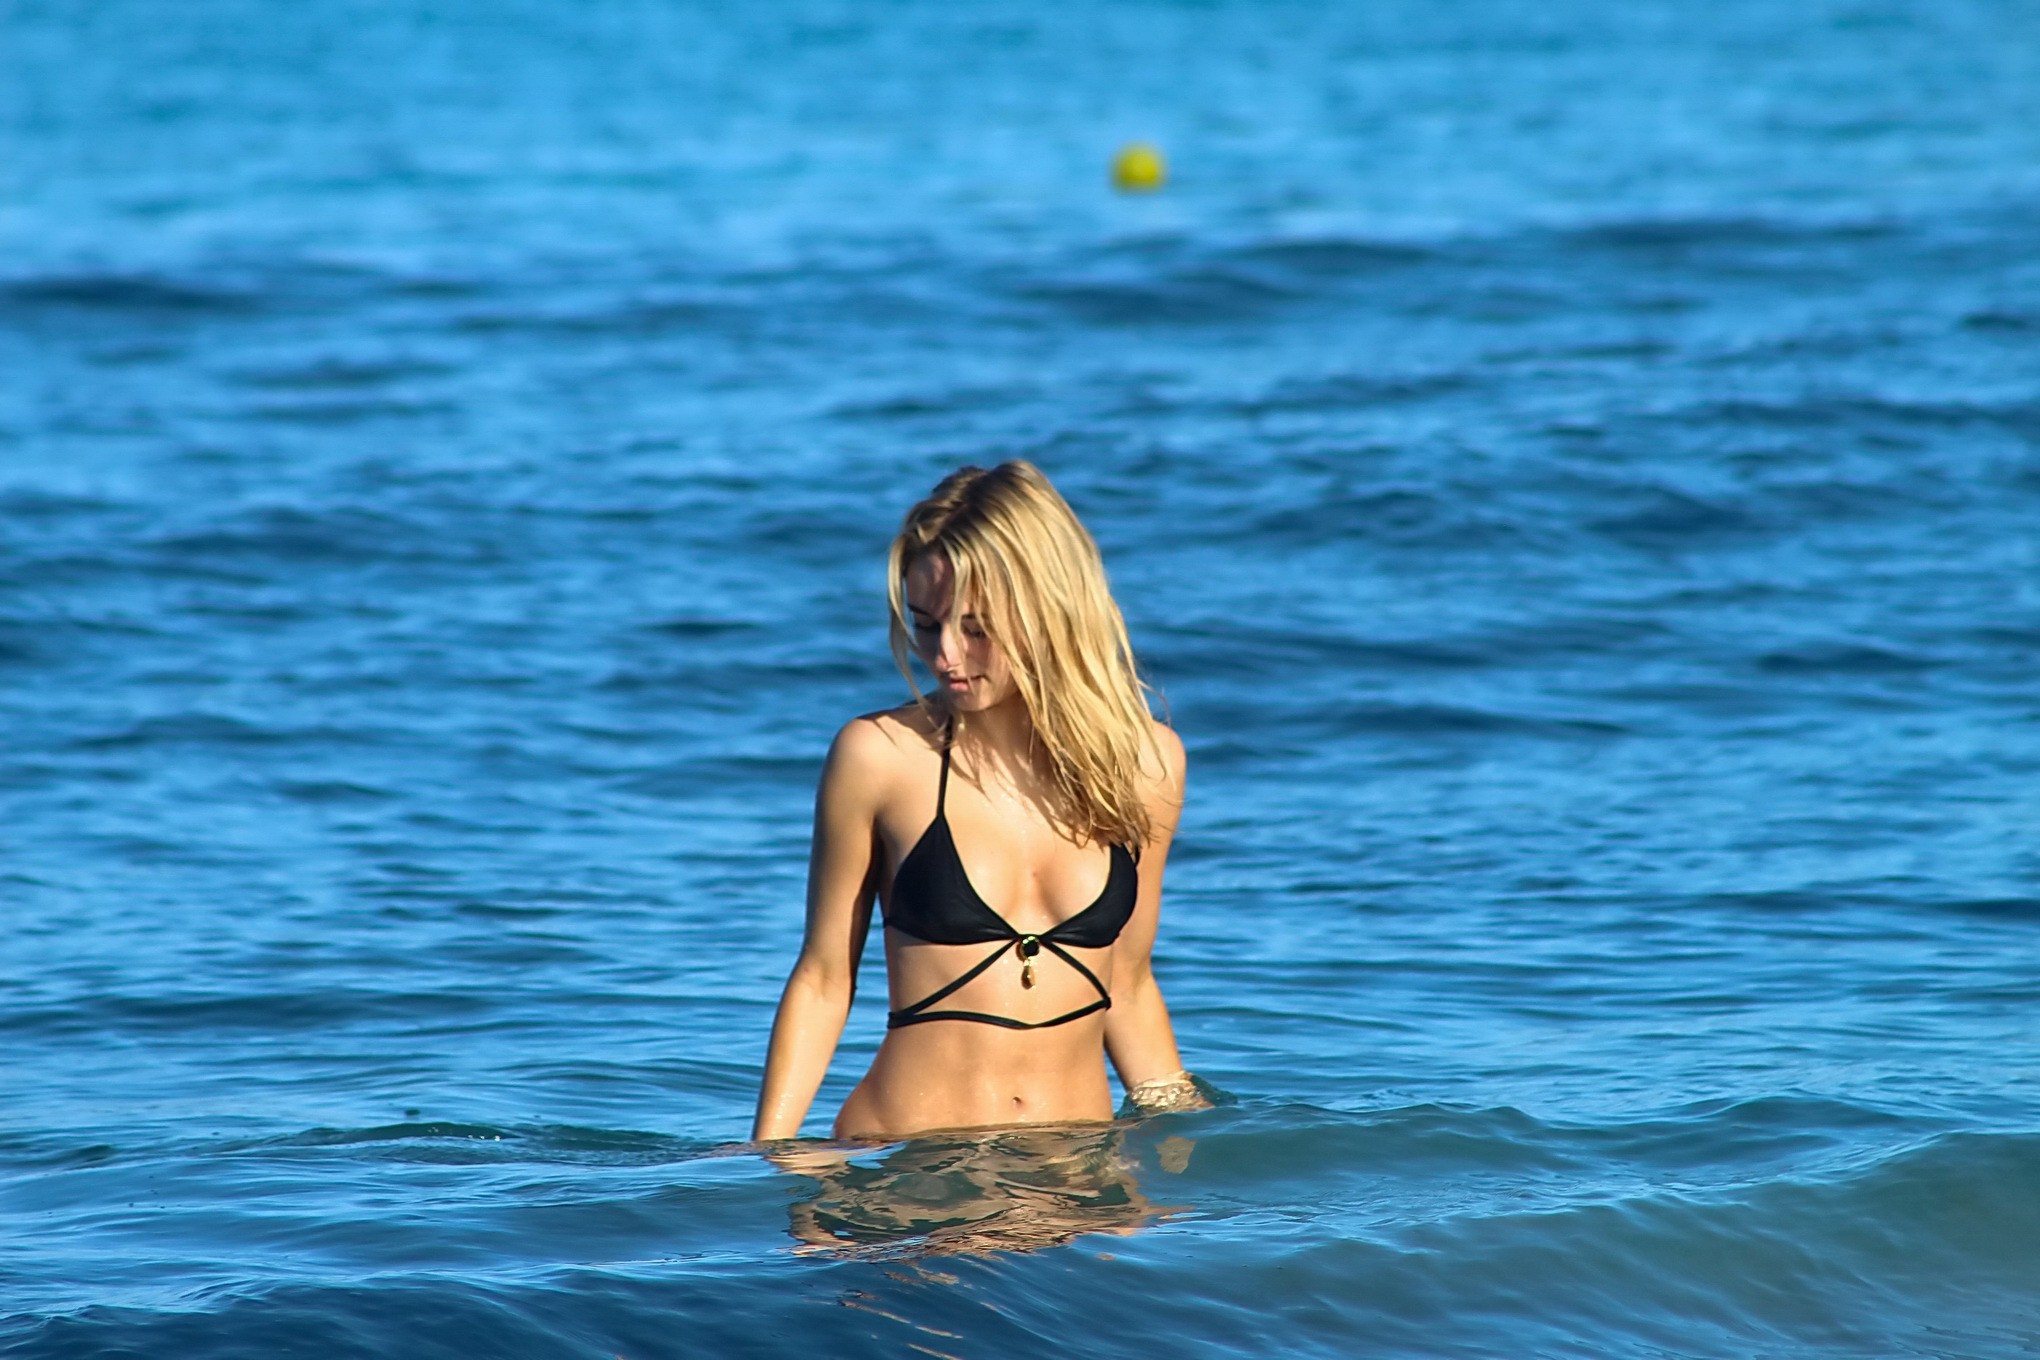 Kimberley Garner wearing tiny black bikini at the beach in Barbados #75175398